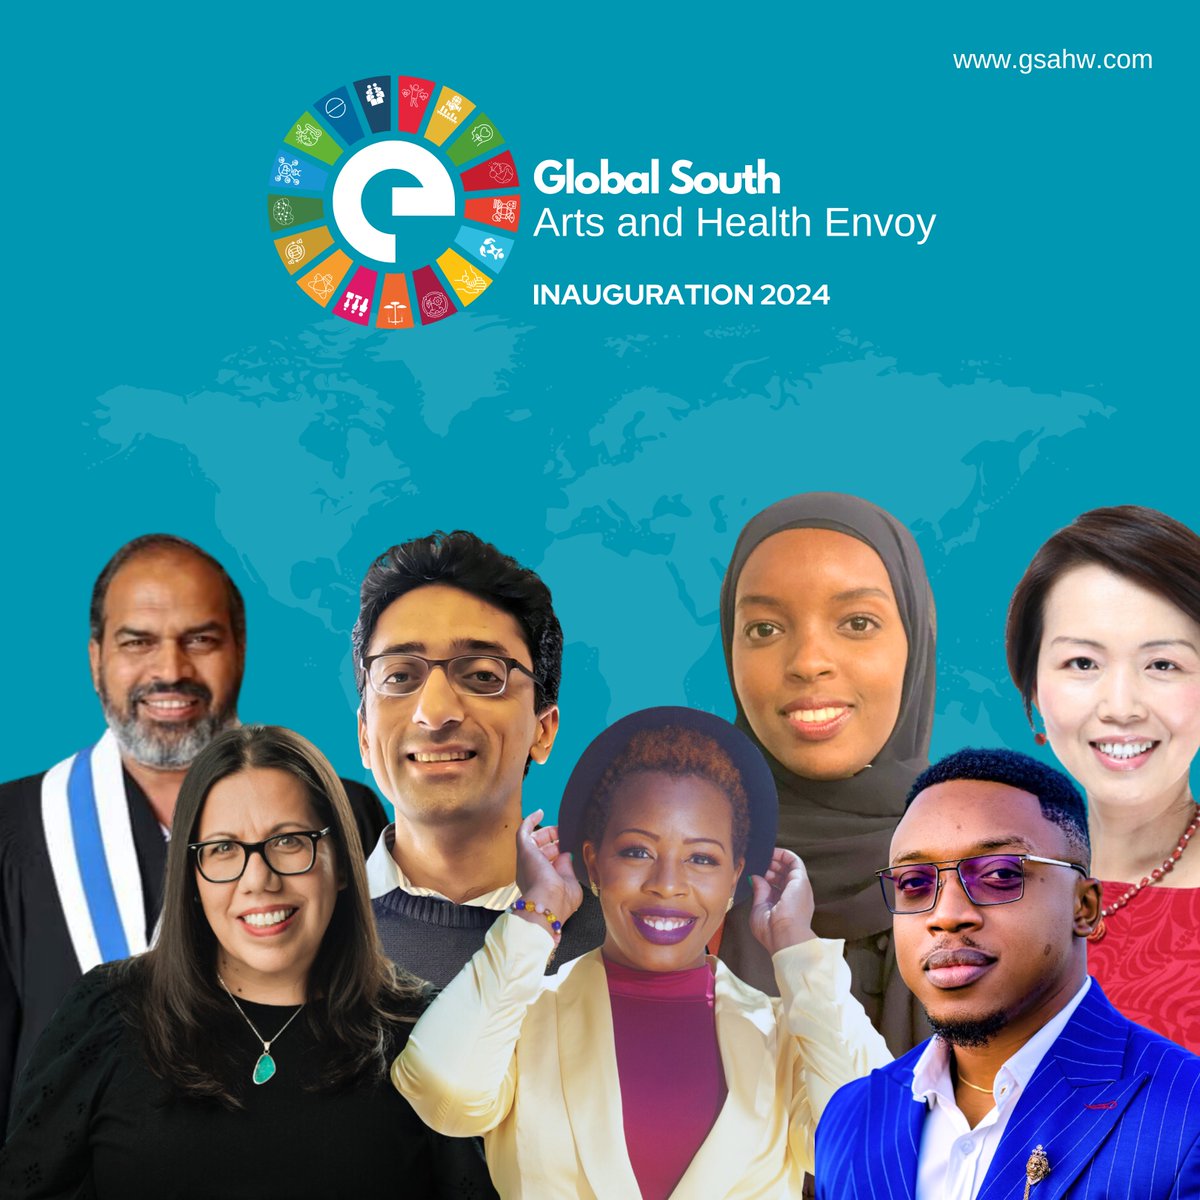 Get to know the 2024 Global South Arts and Health Envoy via this link gsahw.com/gsah-envoy-202…